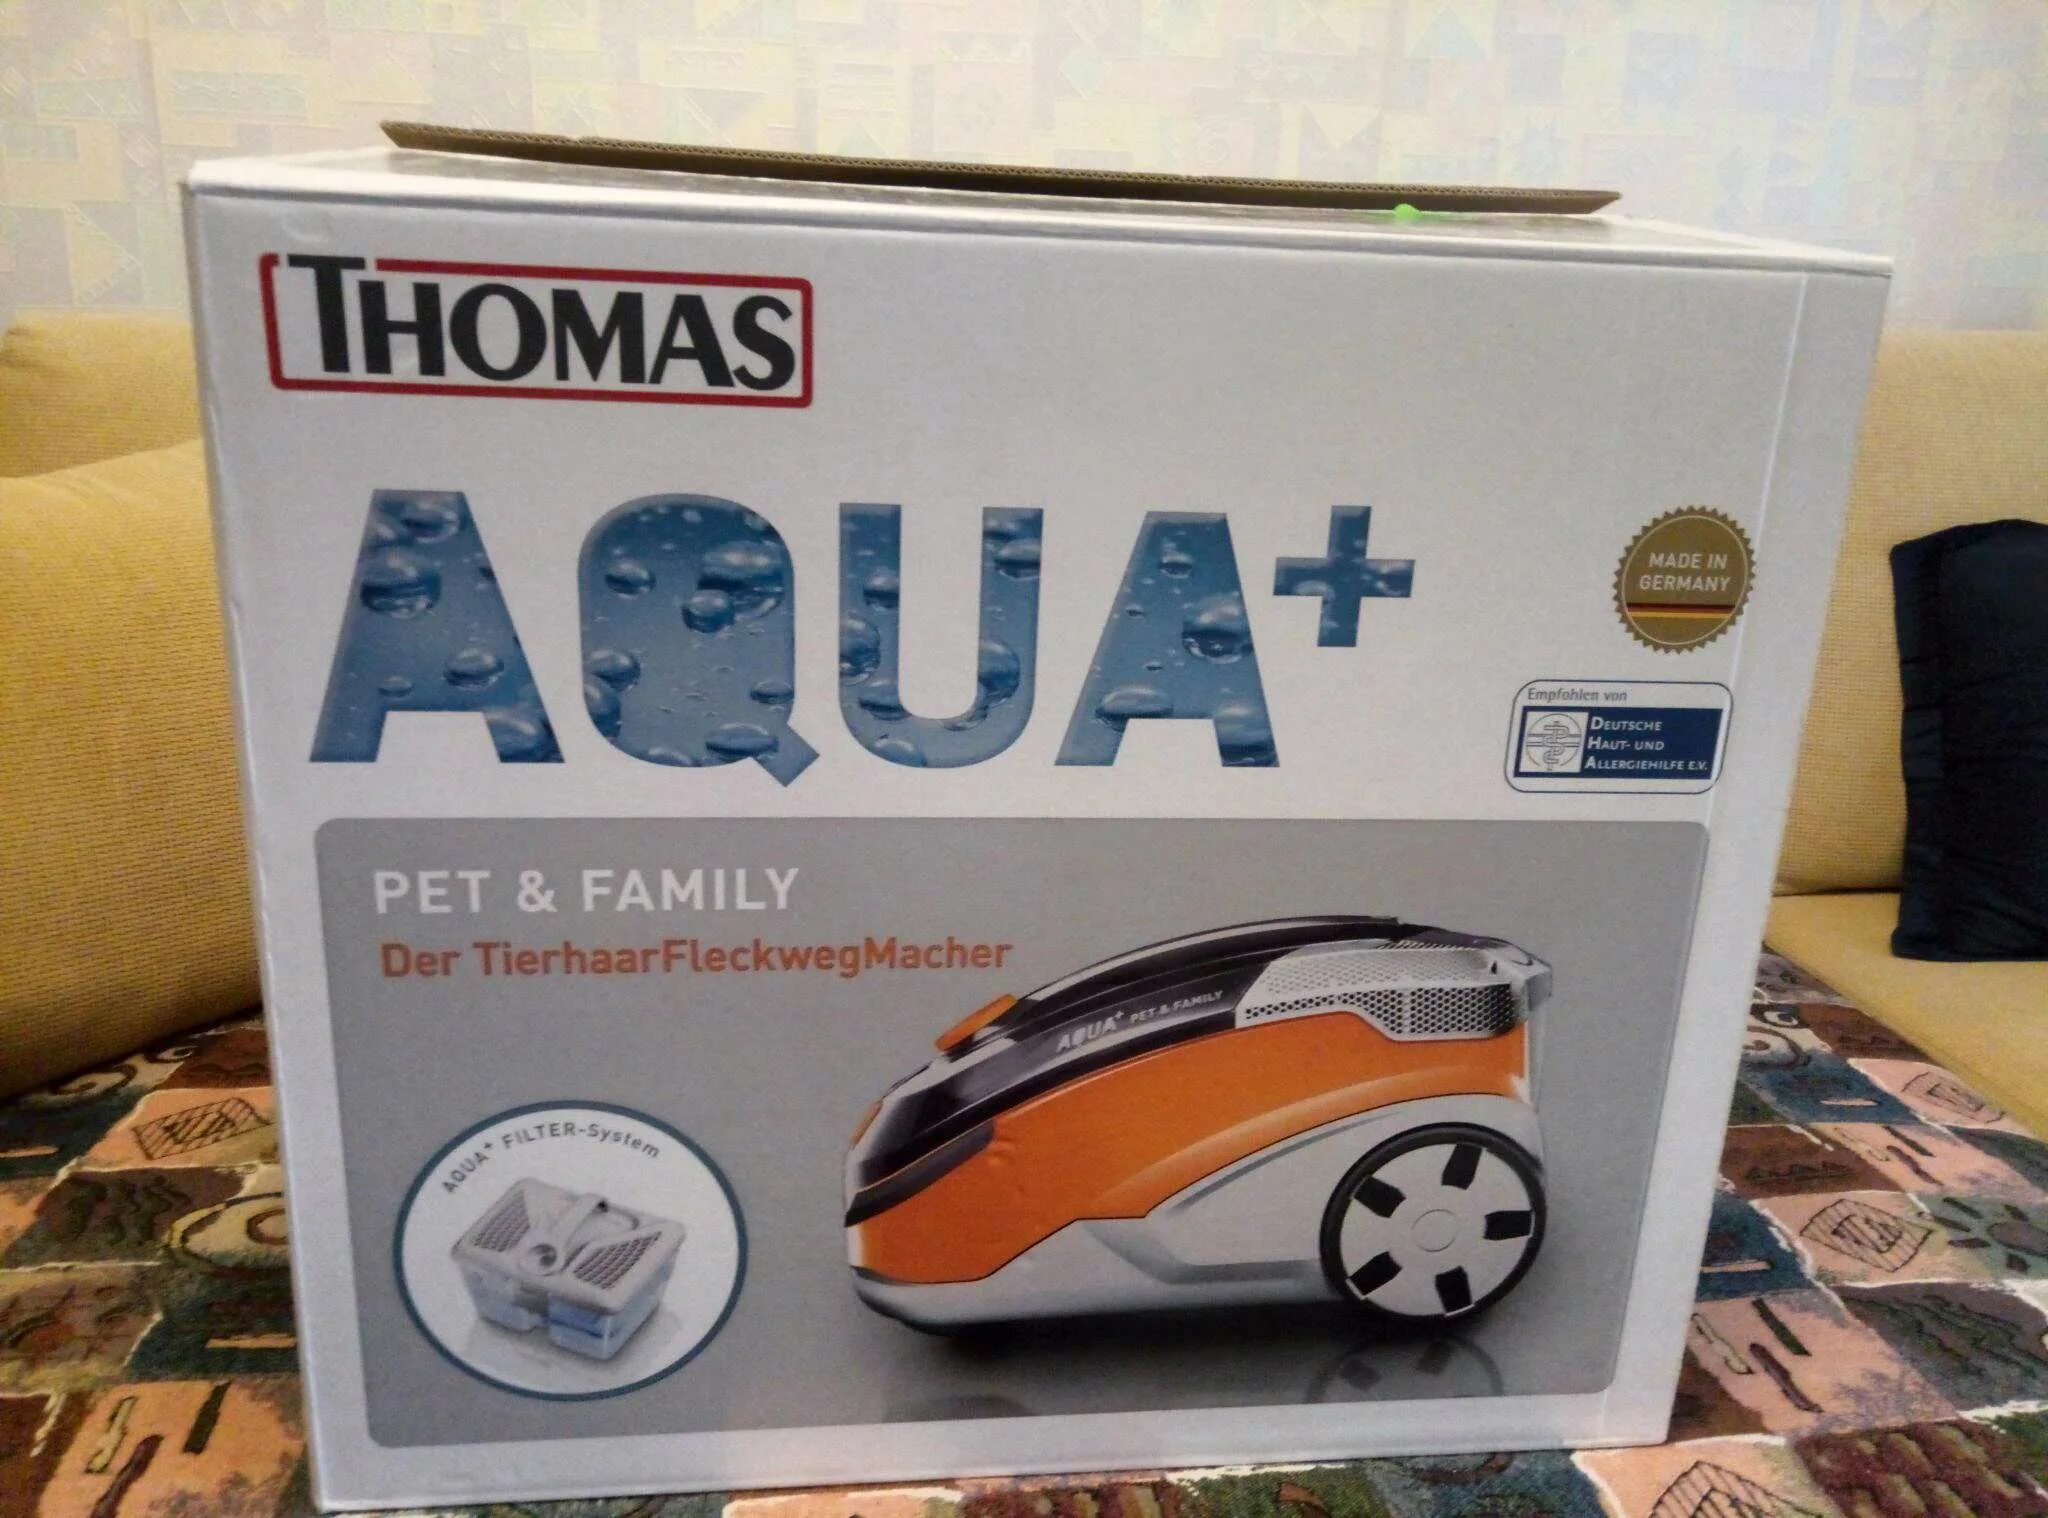 Thomas pet family parquet. Моющий пылесос Thomas Pet & Family. Пылесос Thomas Aqua Pet&Family parquet Pro.